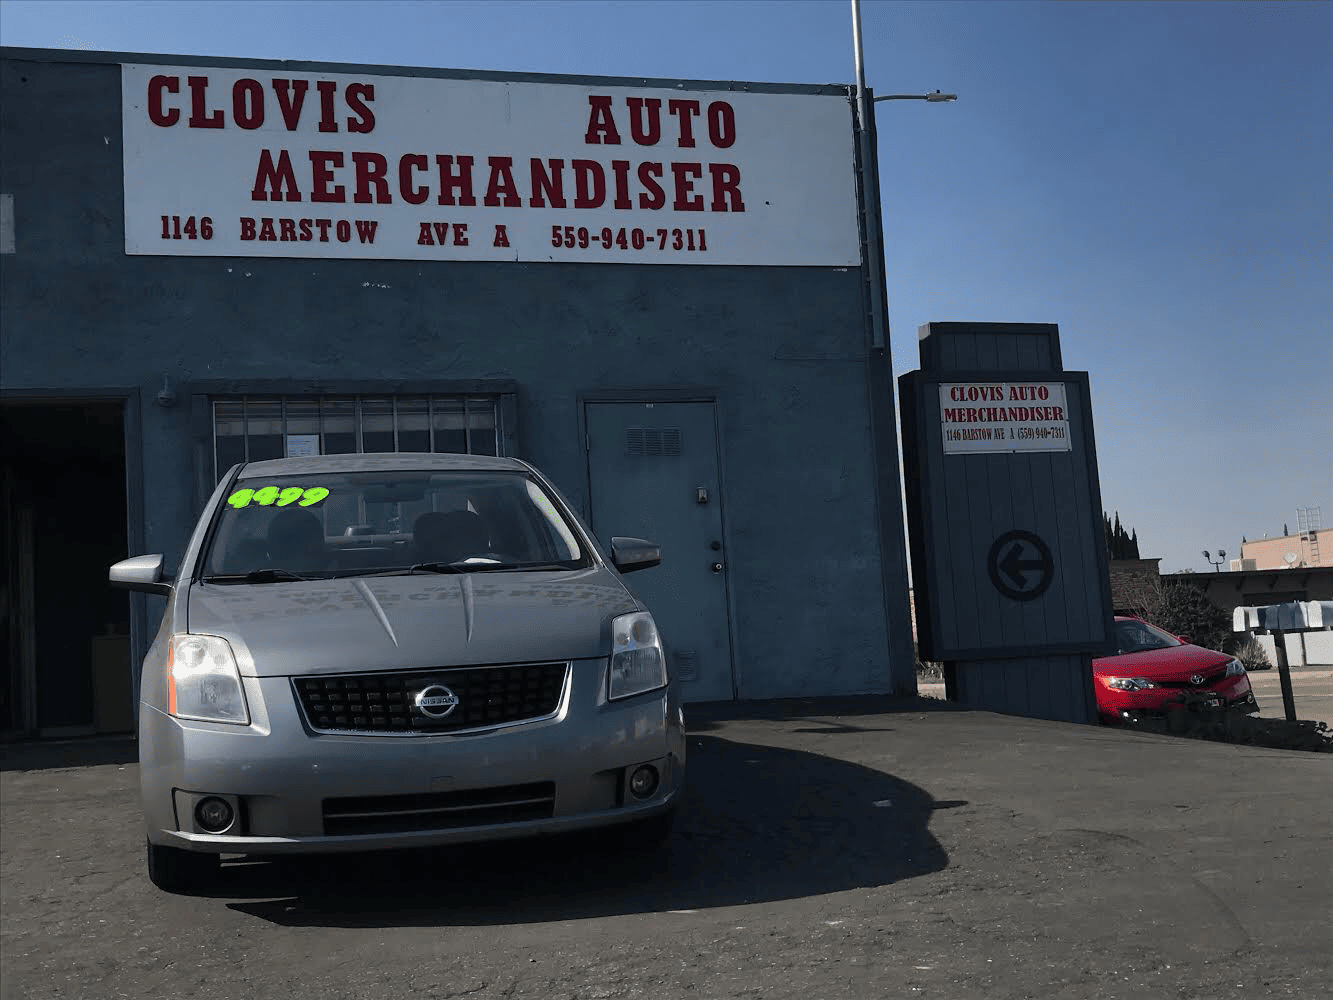 Clovis auto merchandiser, US, honda dealership